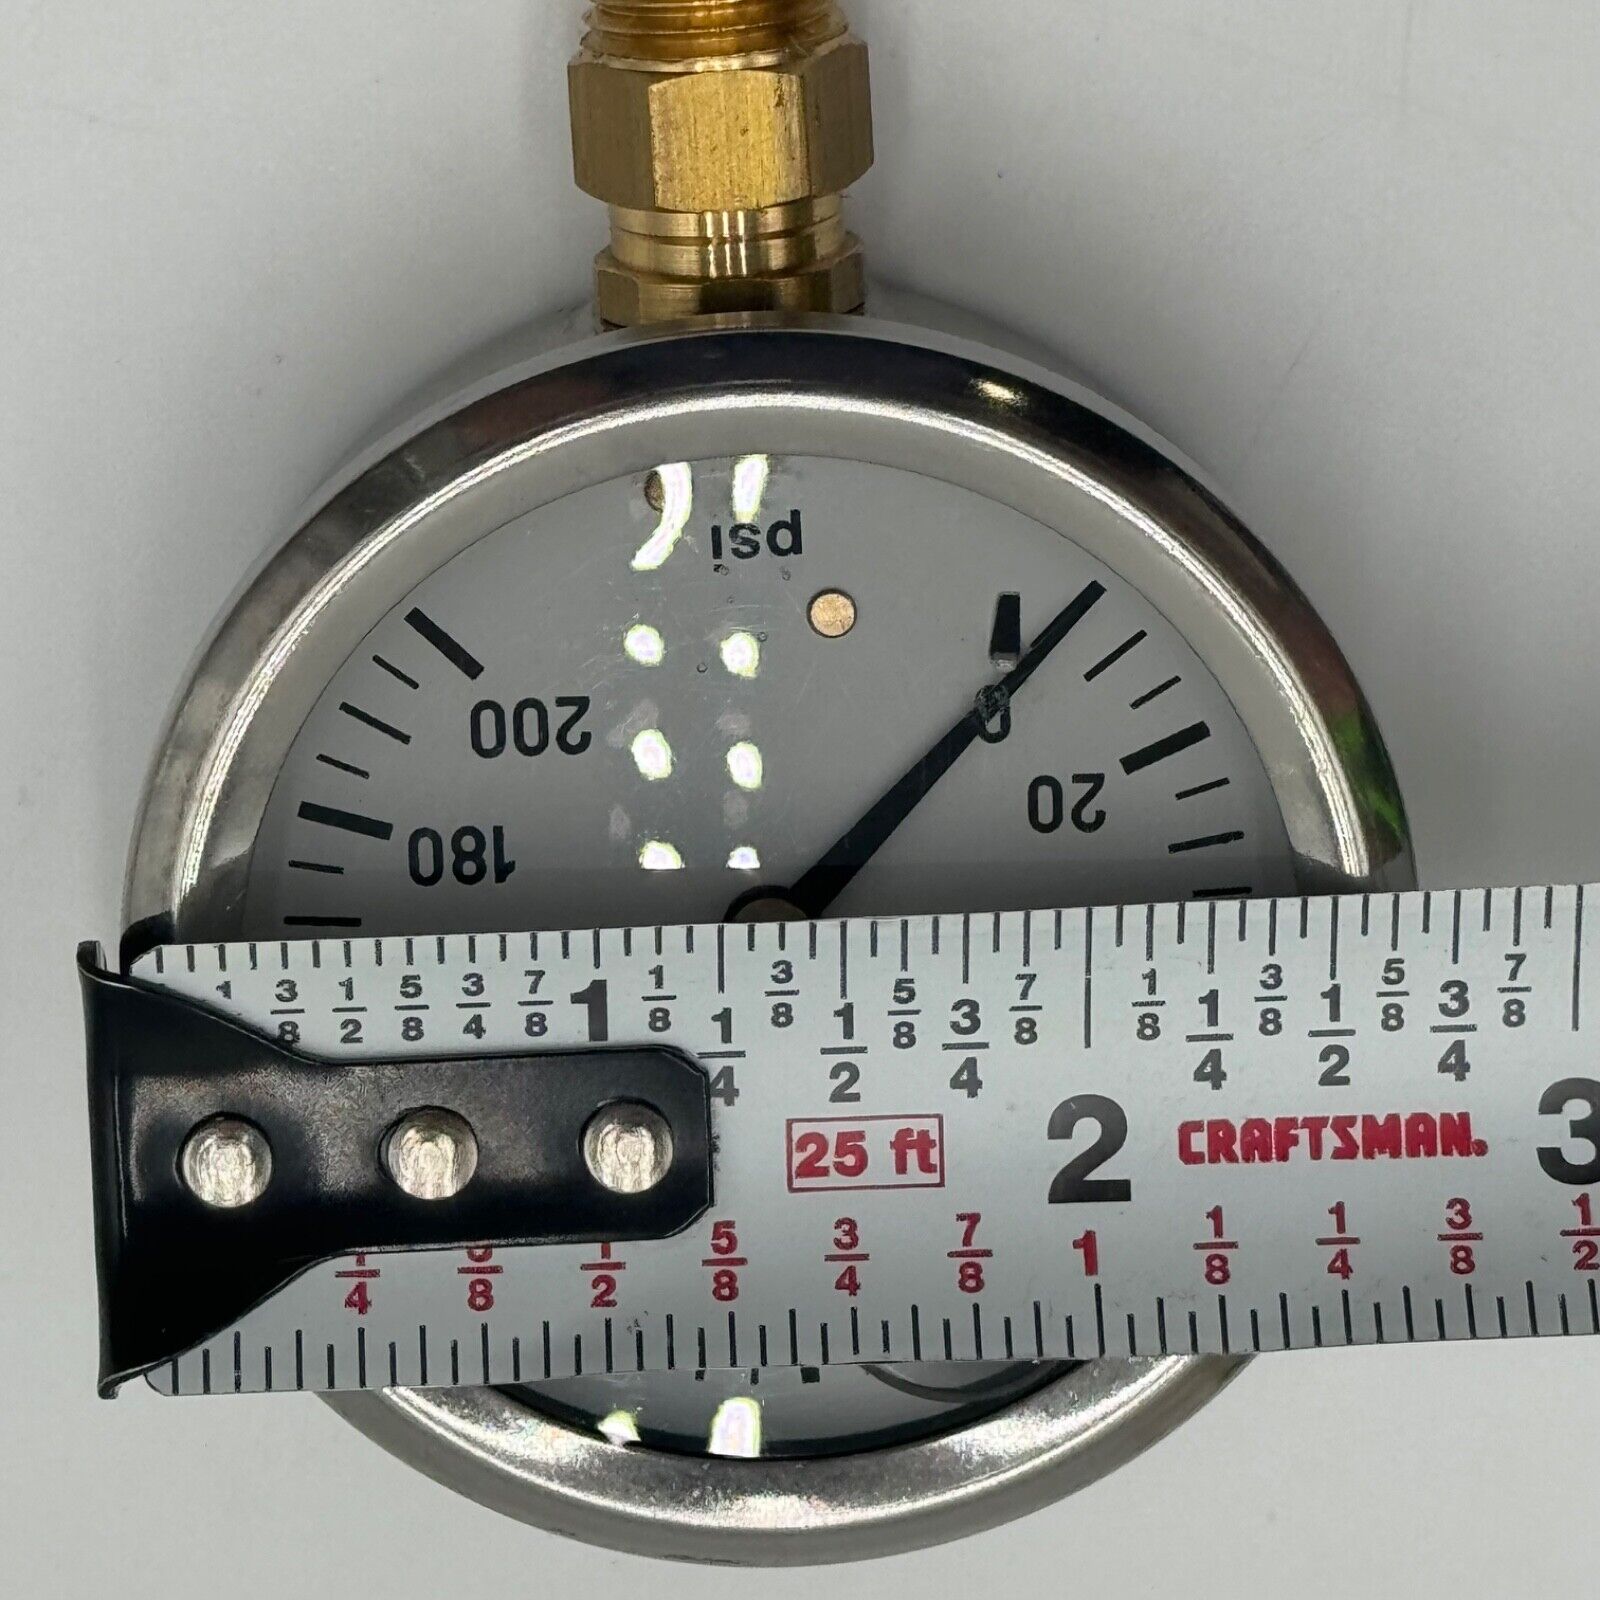 Dynamic Fluid Components Pressure Gauge CF1P-015A 0-200psi 1/4” NPT Bottom Mount